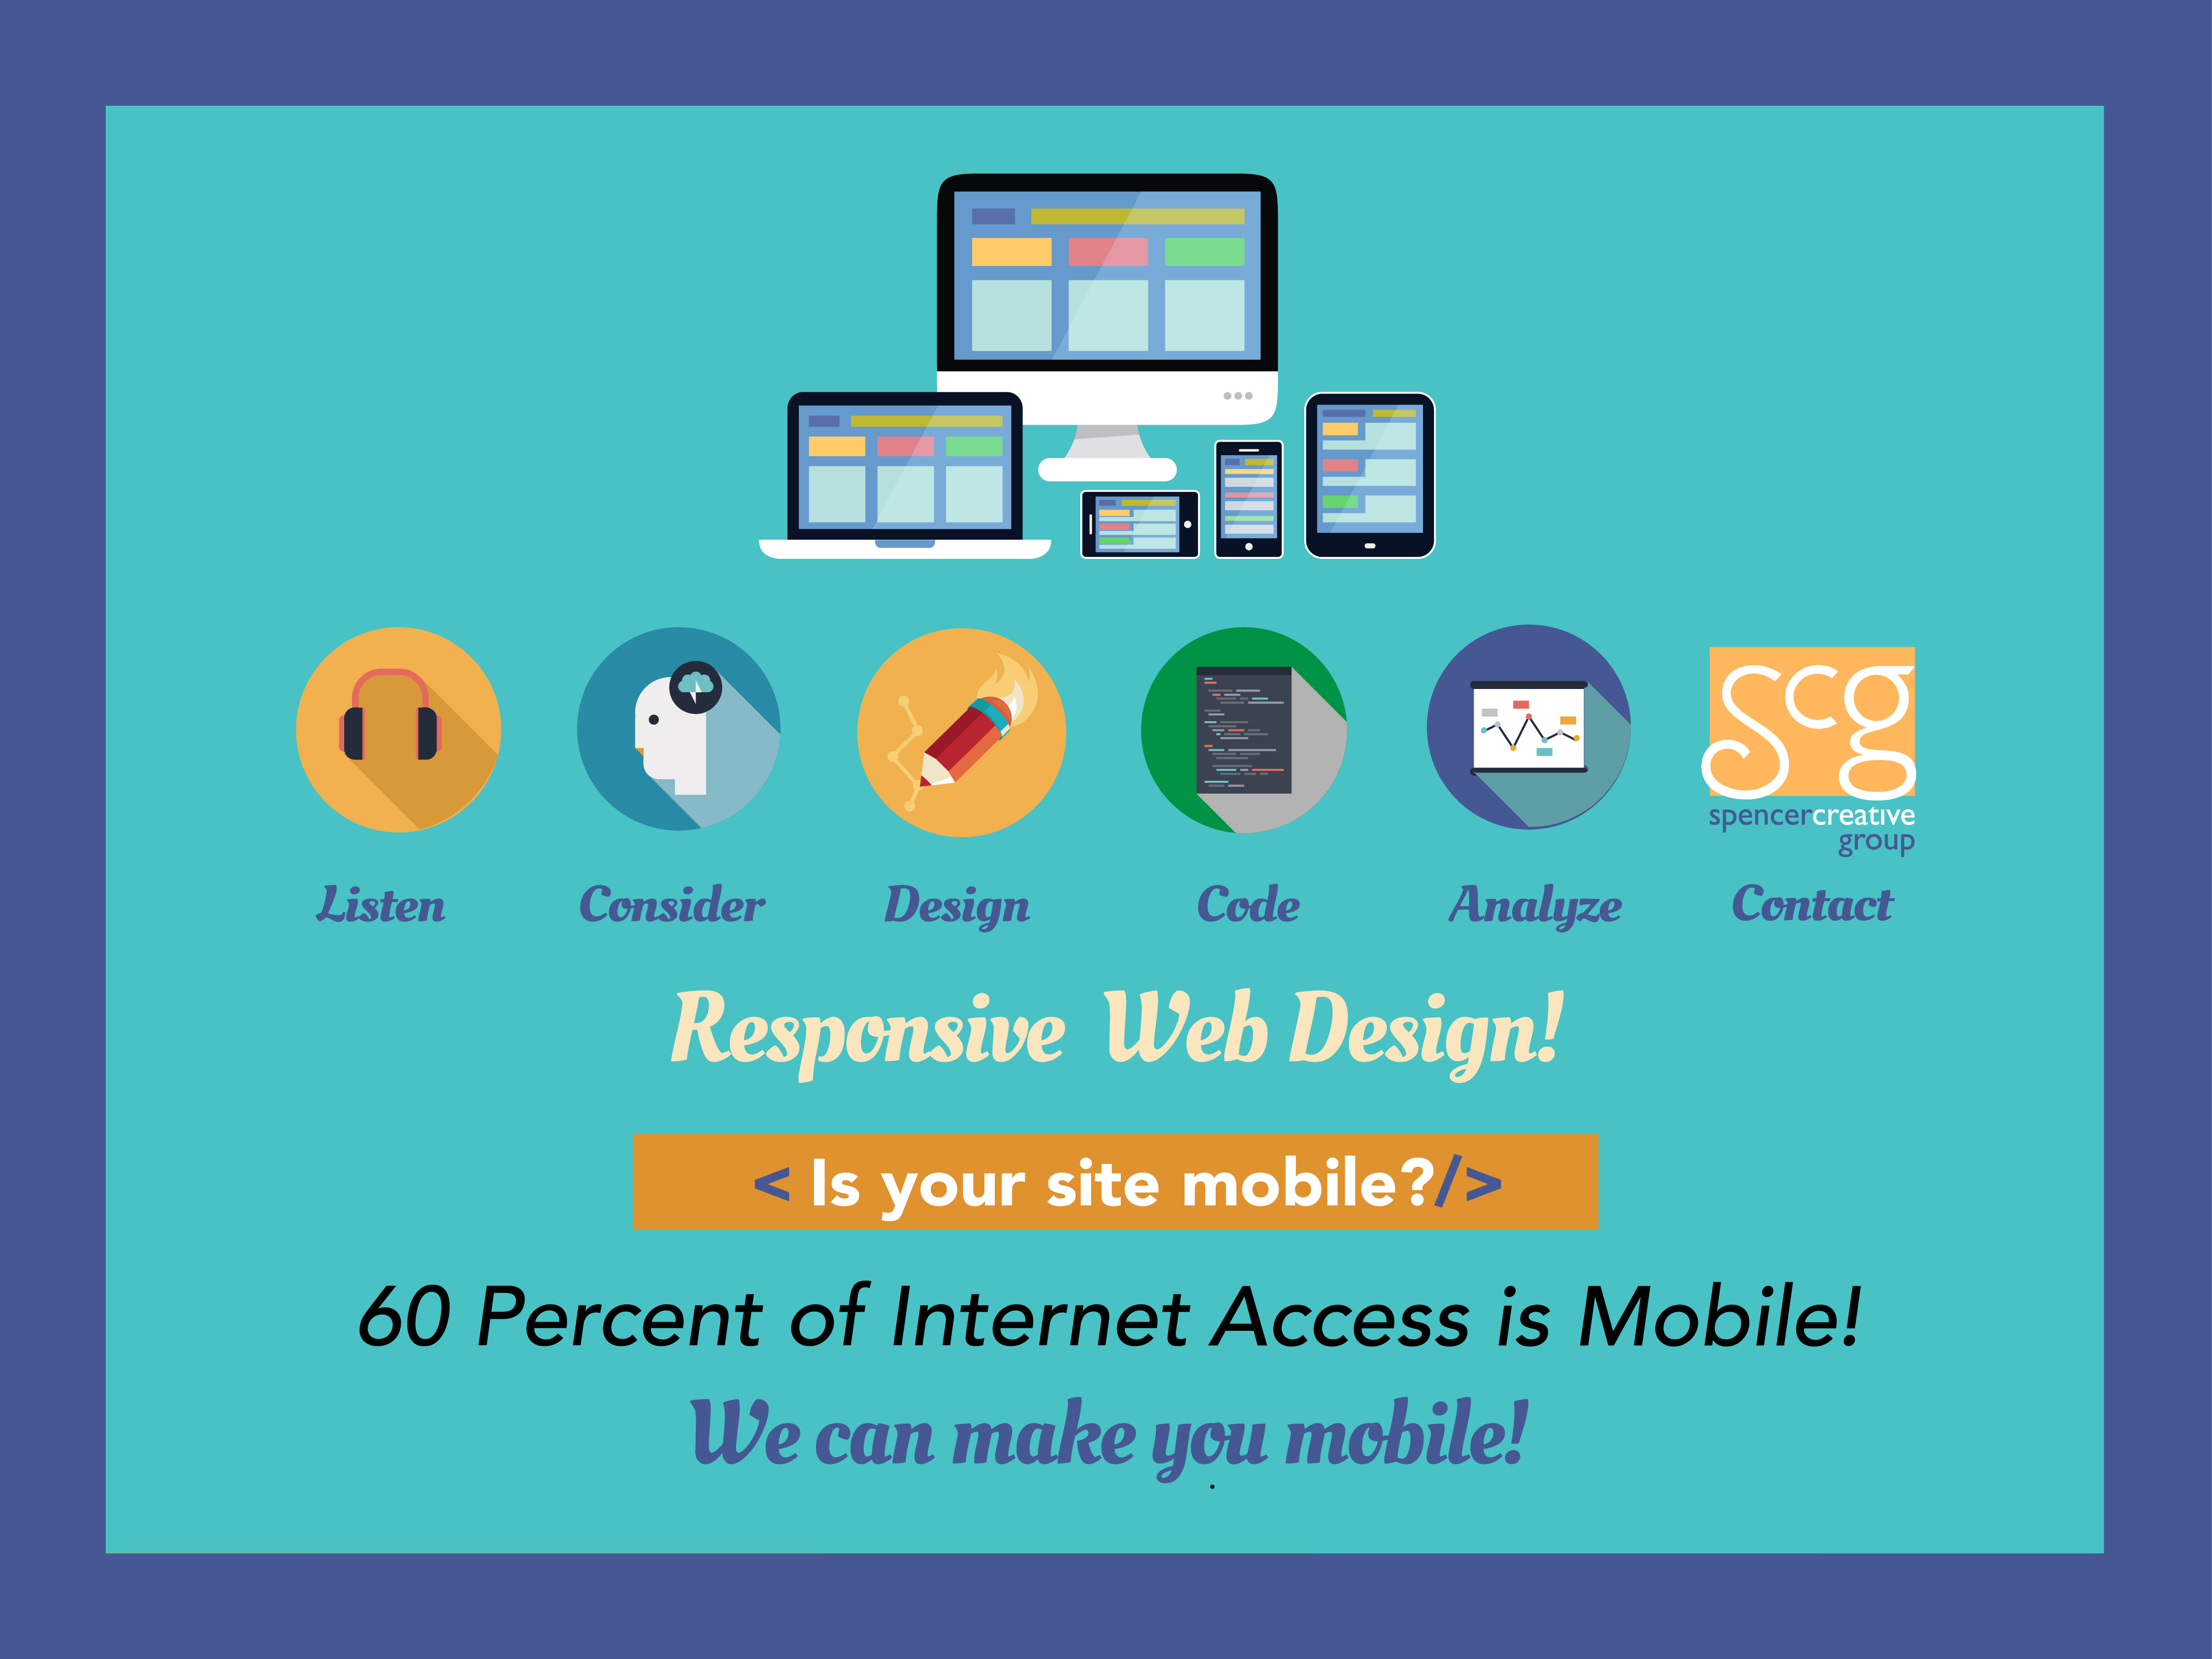 SCG Can Make You Mobile!